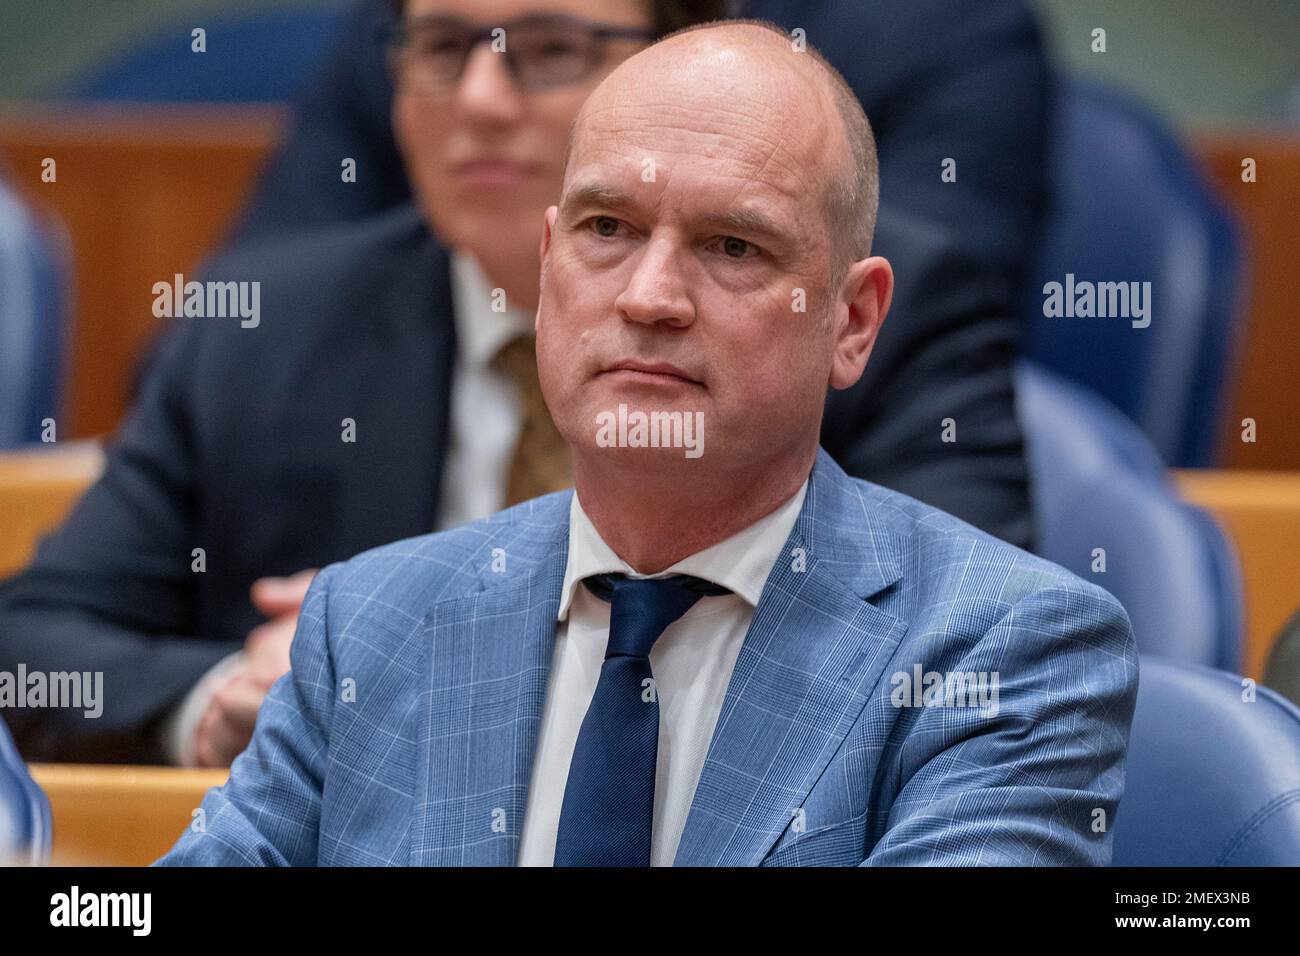 DEN HAAG, NIEDERLANDE - JANUAR 22: Gert-Jan Segers während seines Abschieds im niederländischen Repräsentantenhaus. (Foto: Jeroen MeuwsenOrange Pictures) Stockfoto